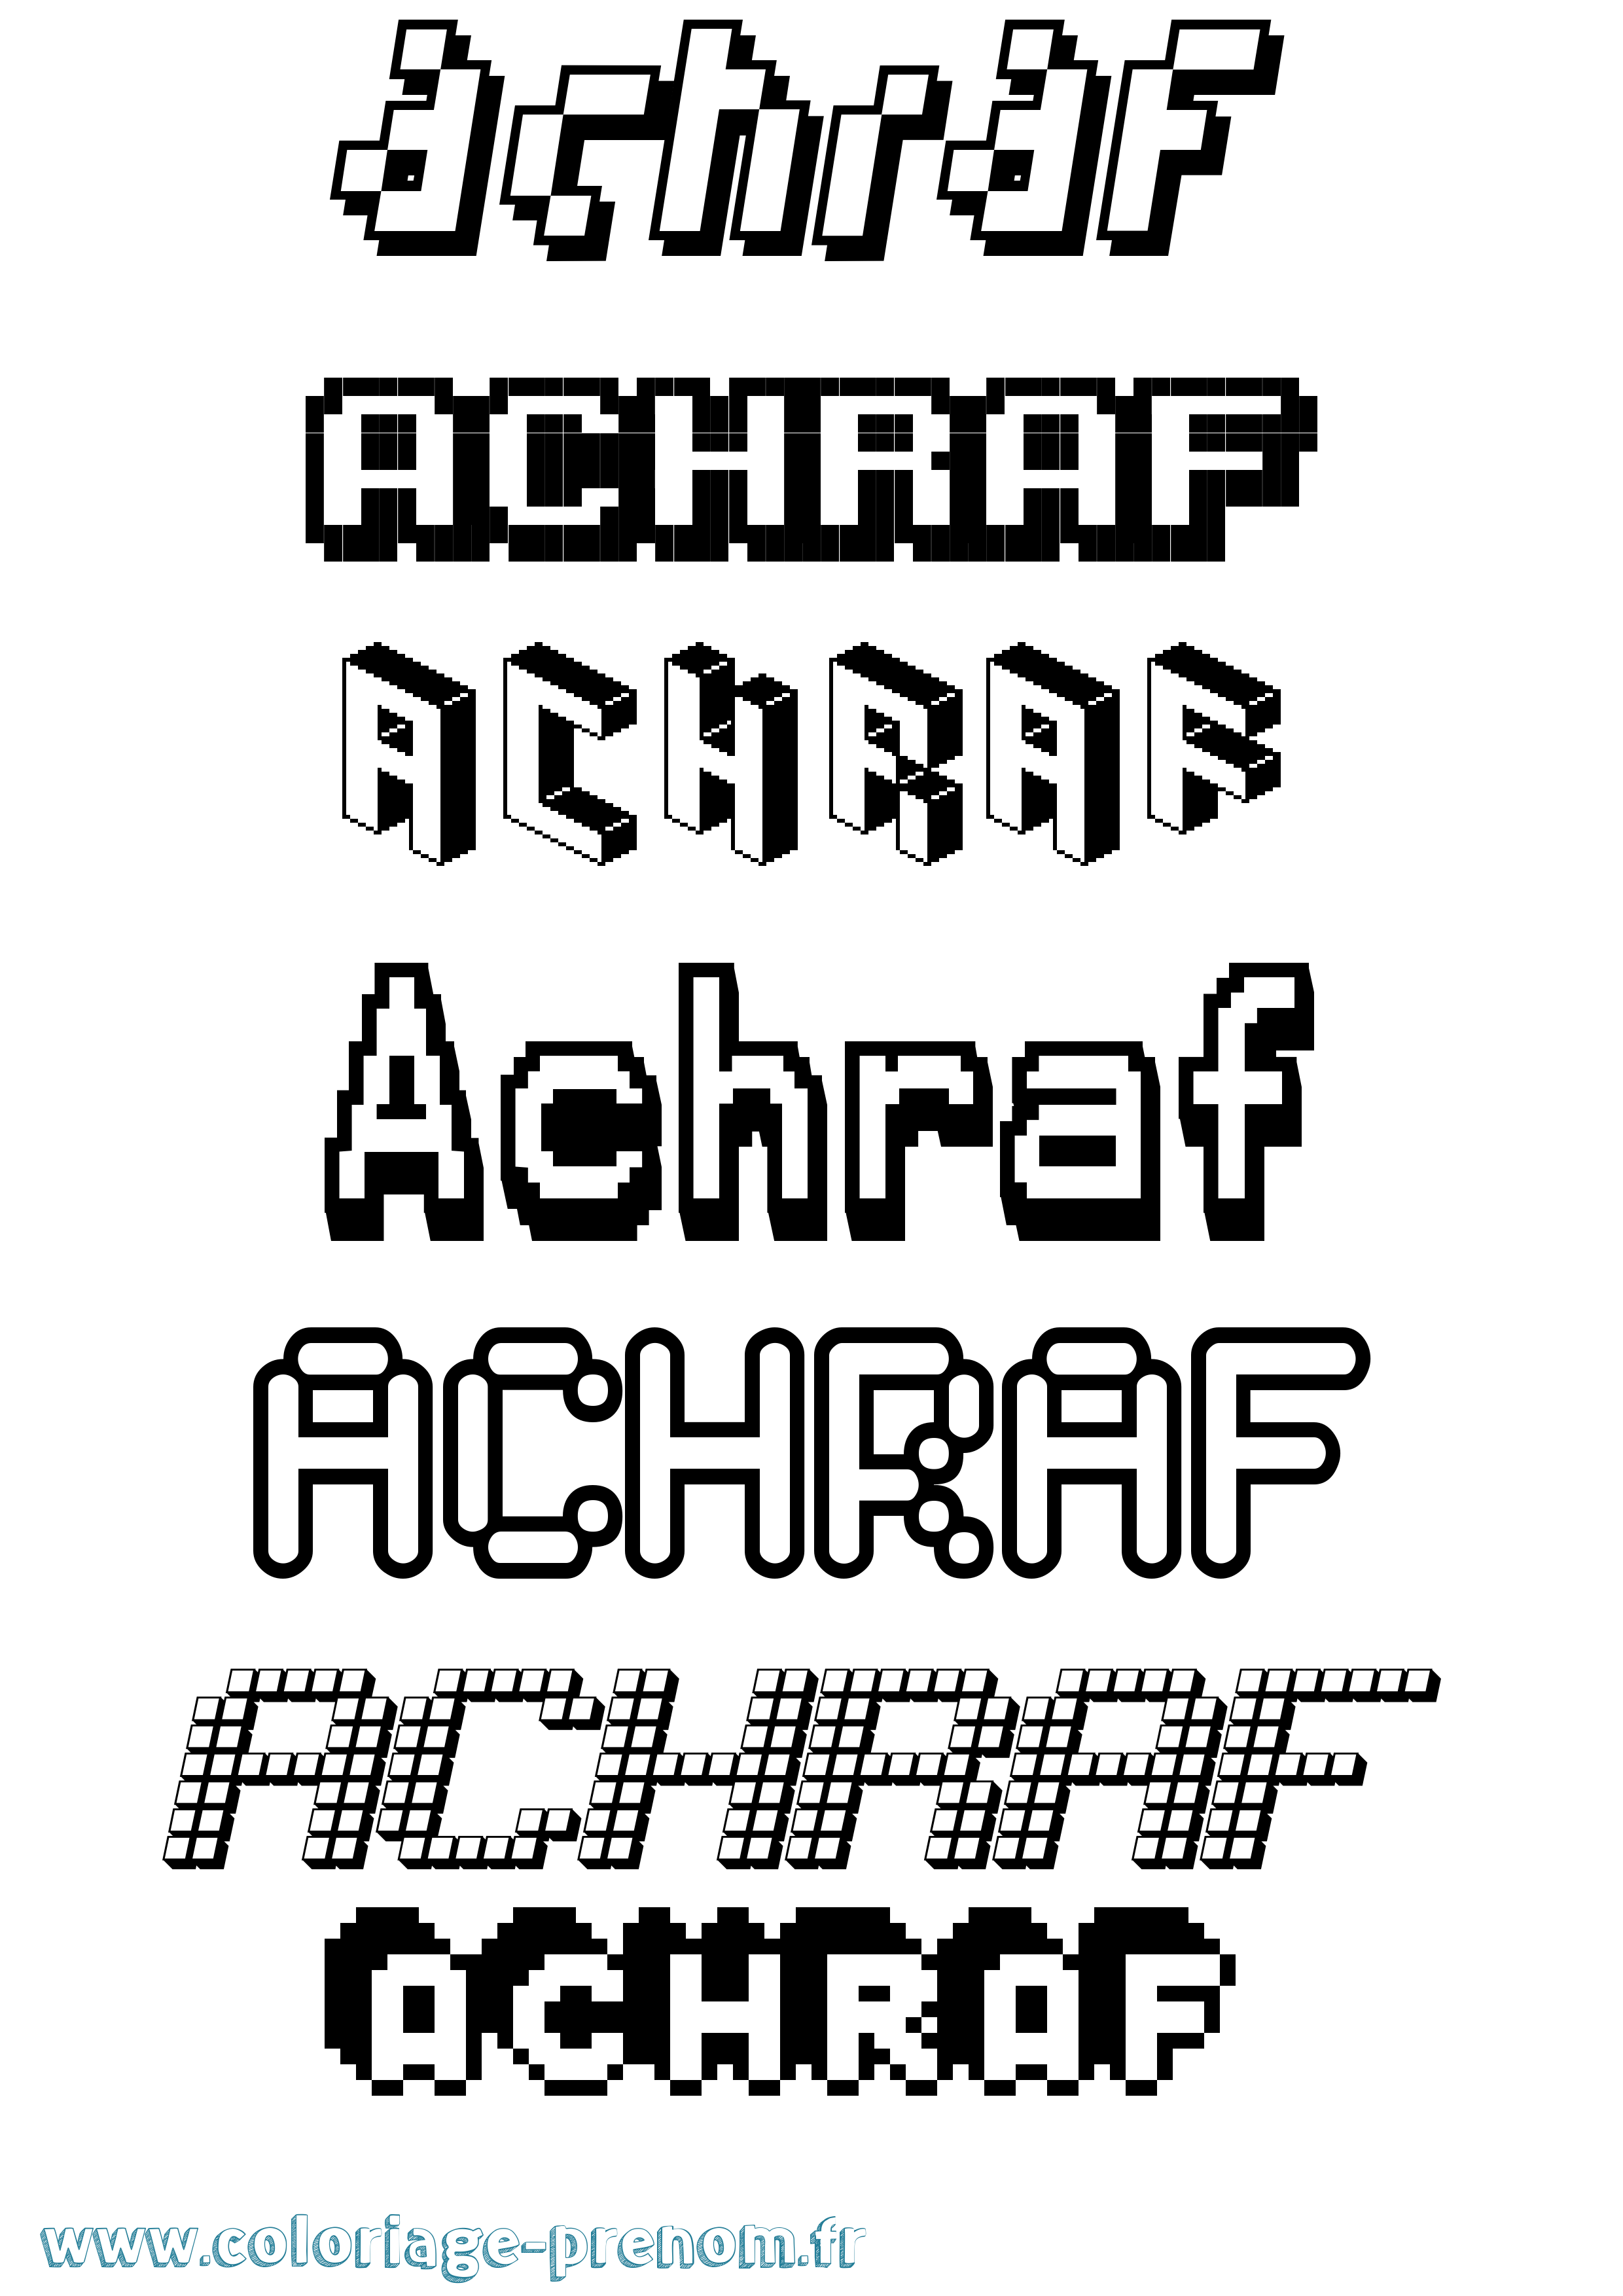 Coloriage prénom Achraf Pixel